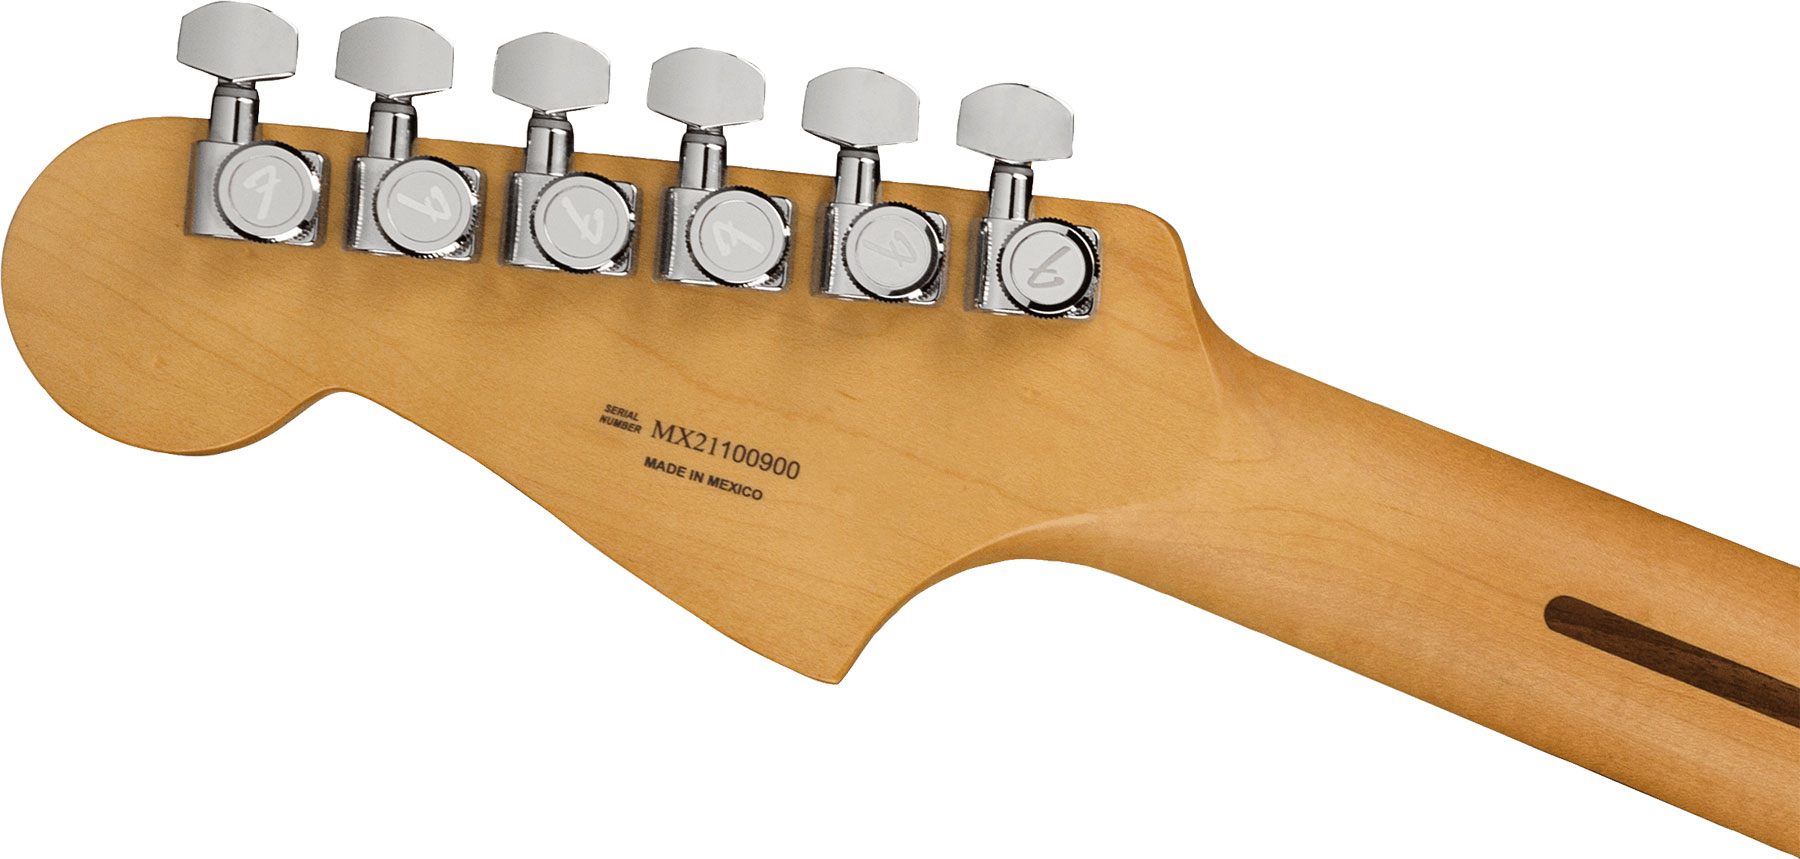 Fender Meteora Player Plus Hh Mex 2h Ht Pf - Belair Blue - Retro rock electric guitar - Variation 3